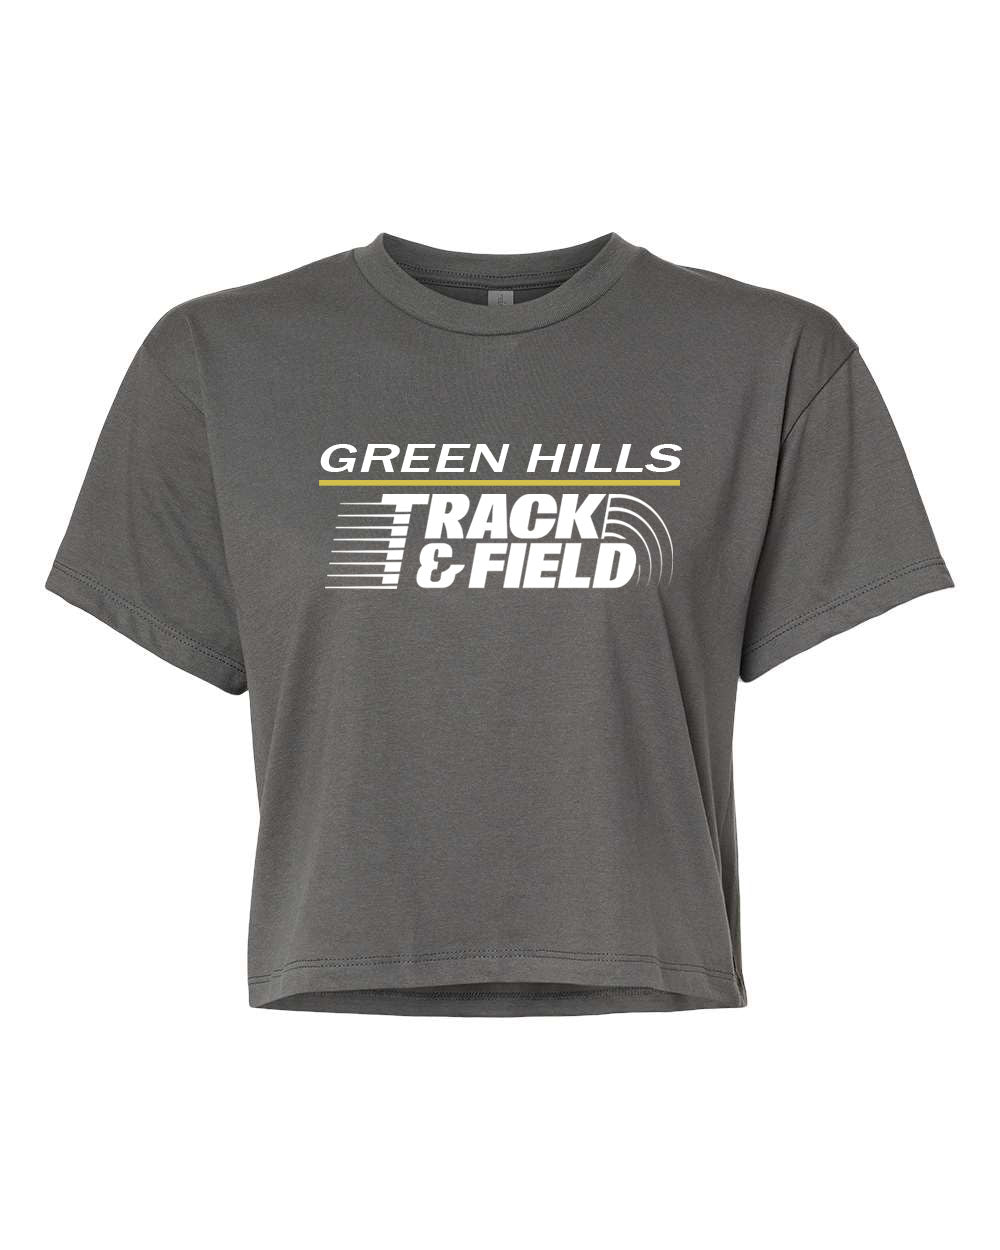 Green Hills Track design 2 Crop Top